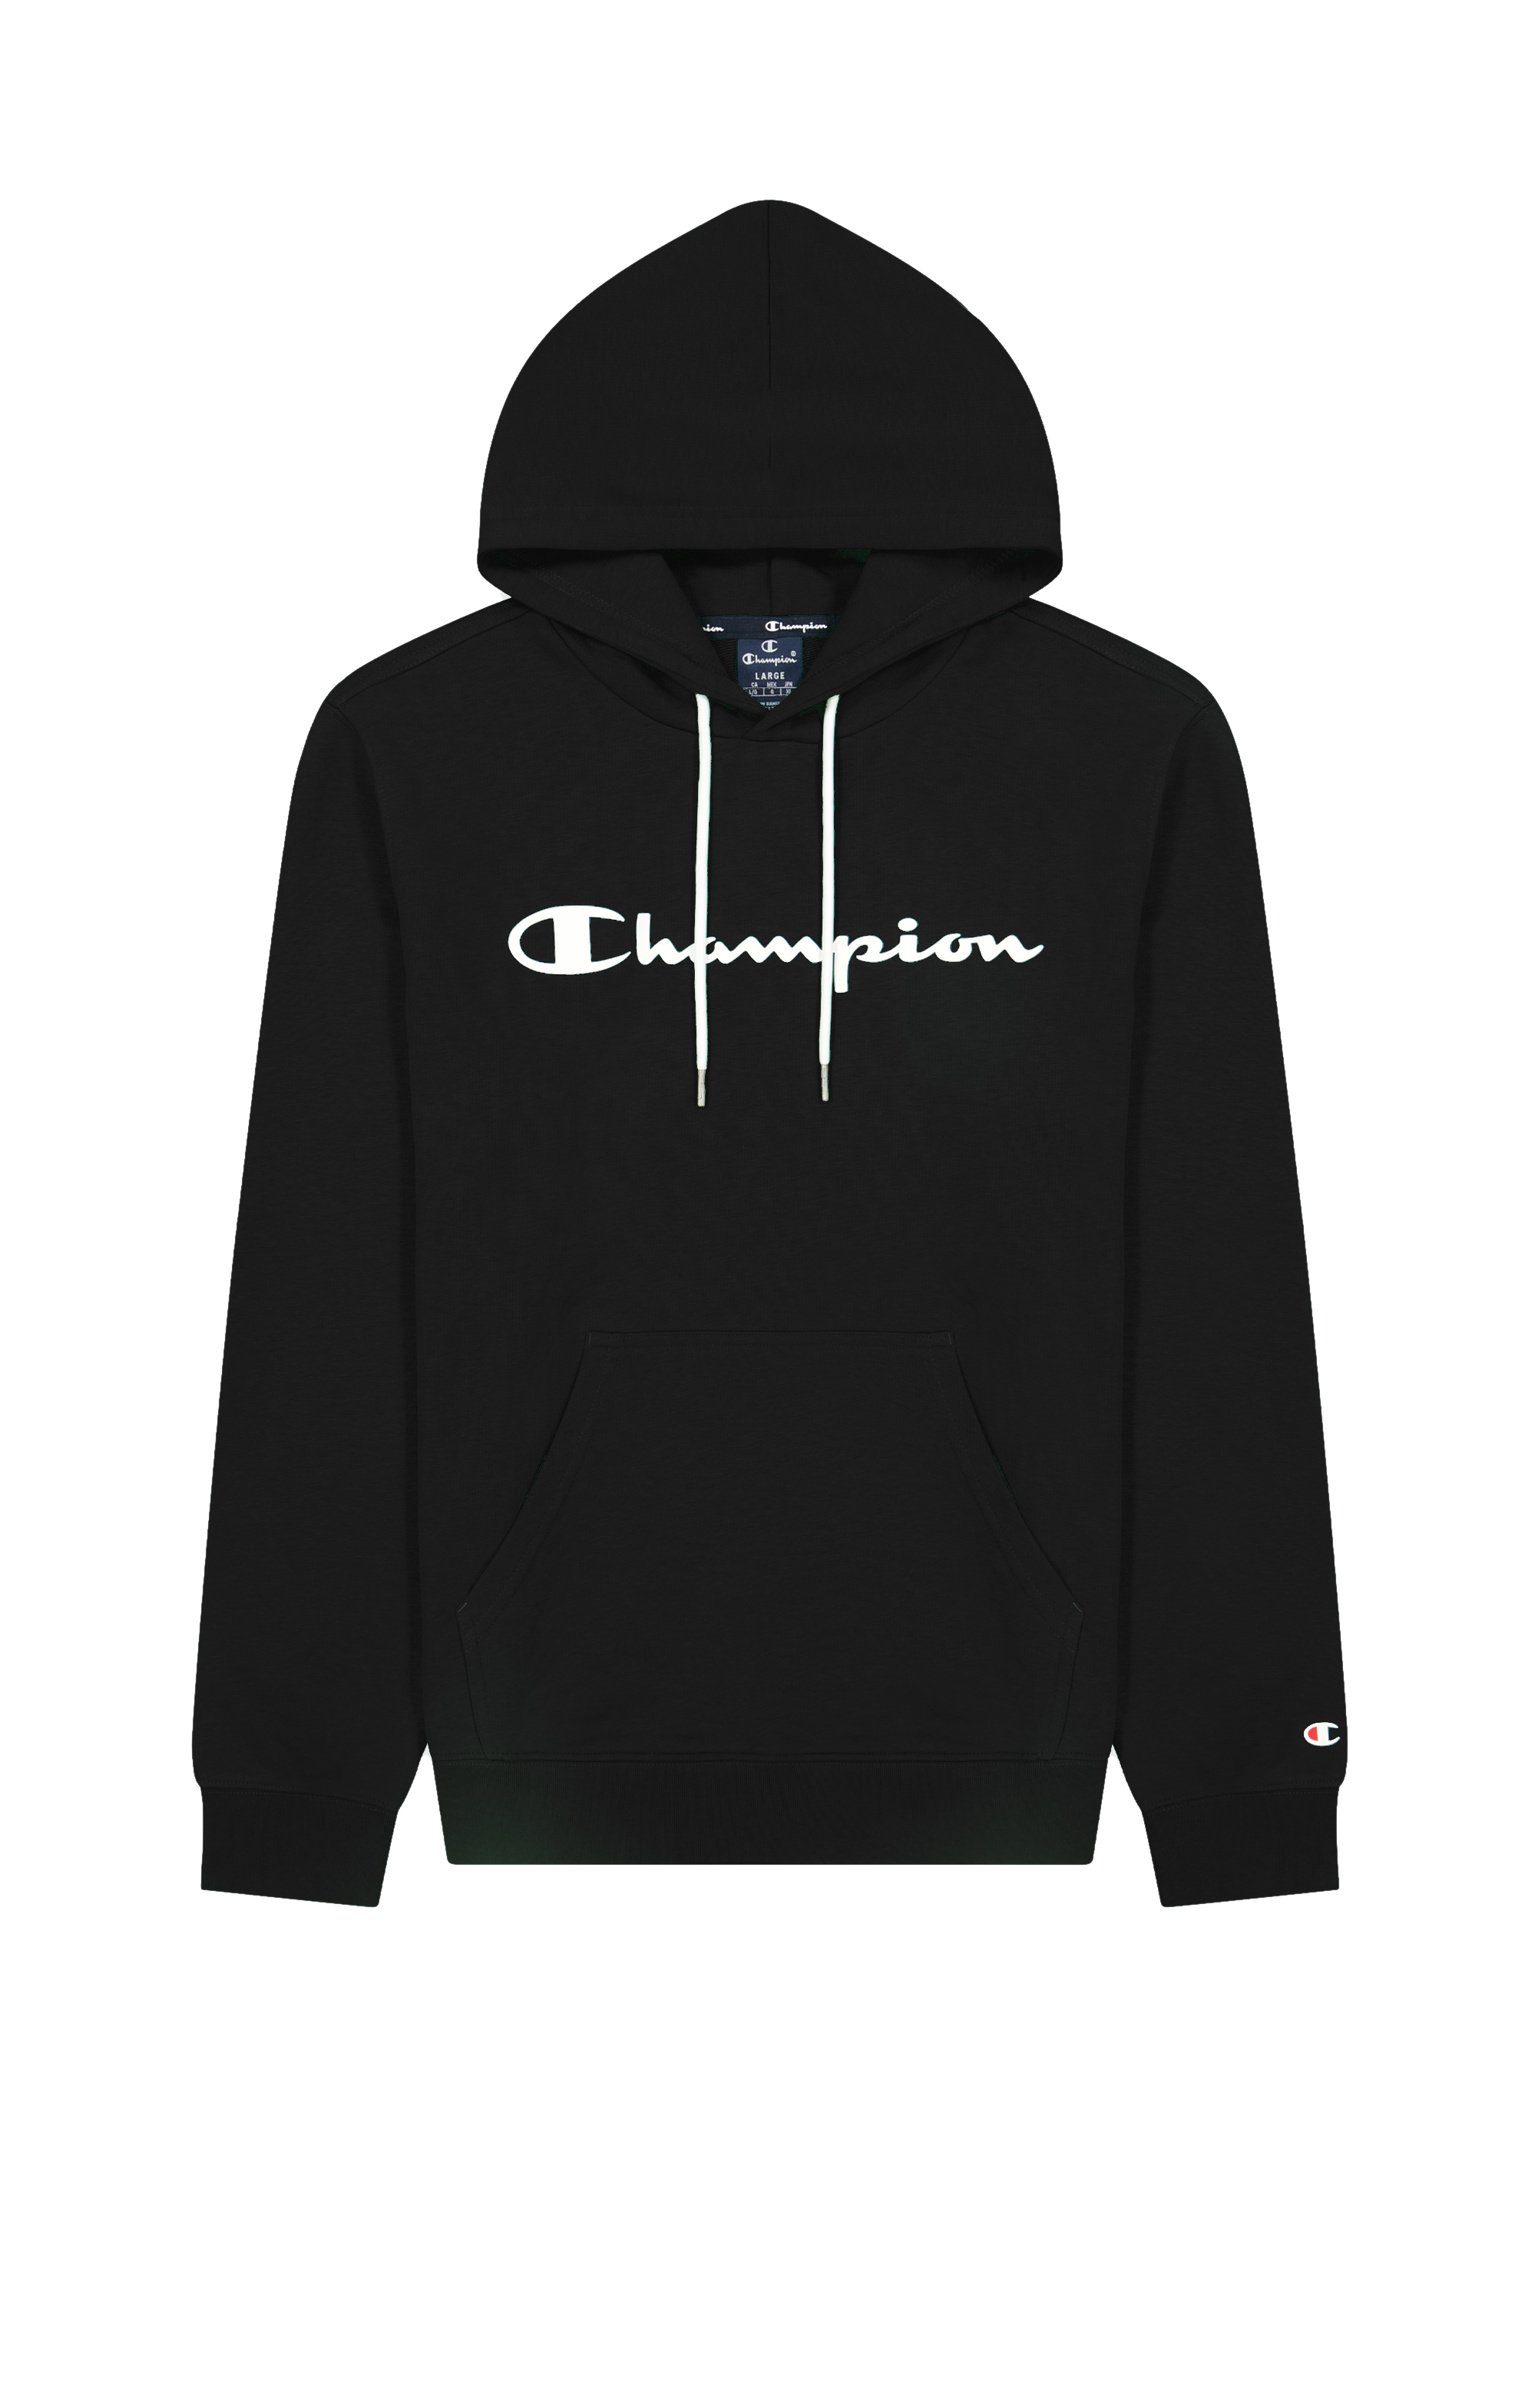 Champion Hoodie Champion Herren Kapuzenpullover Hooded Sweatshirt 217142 nbk (schwarz)